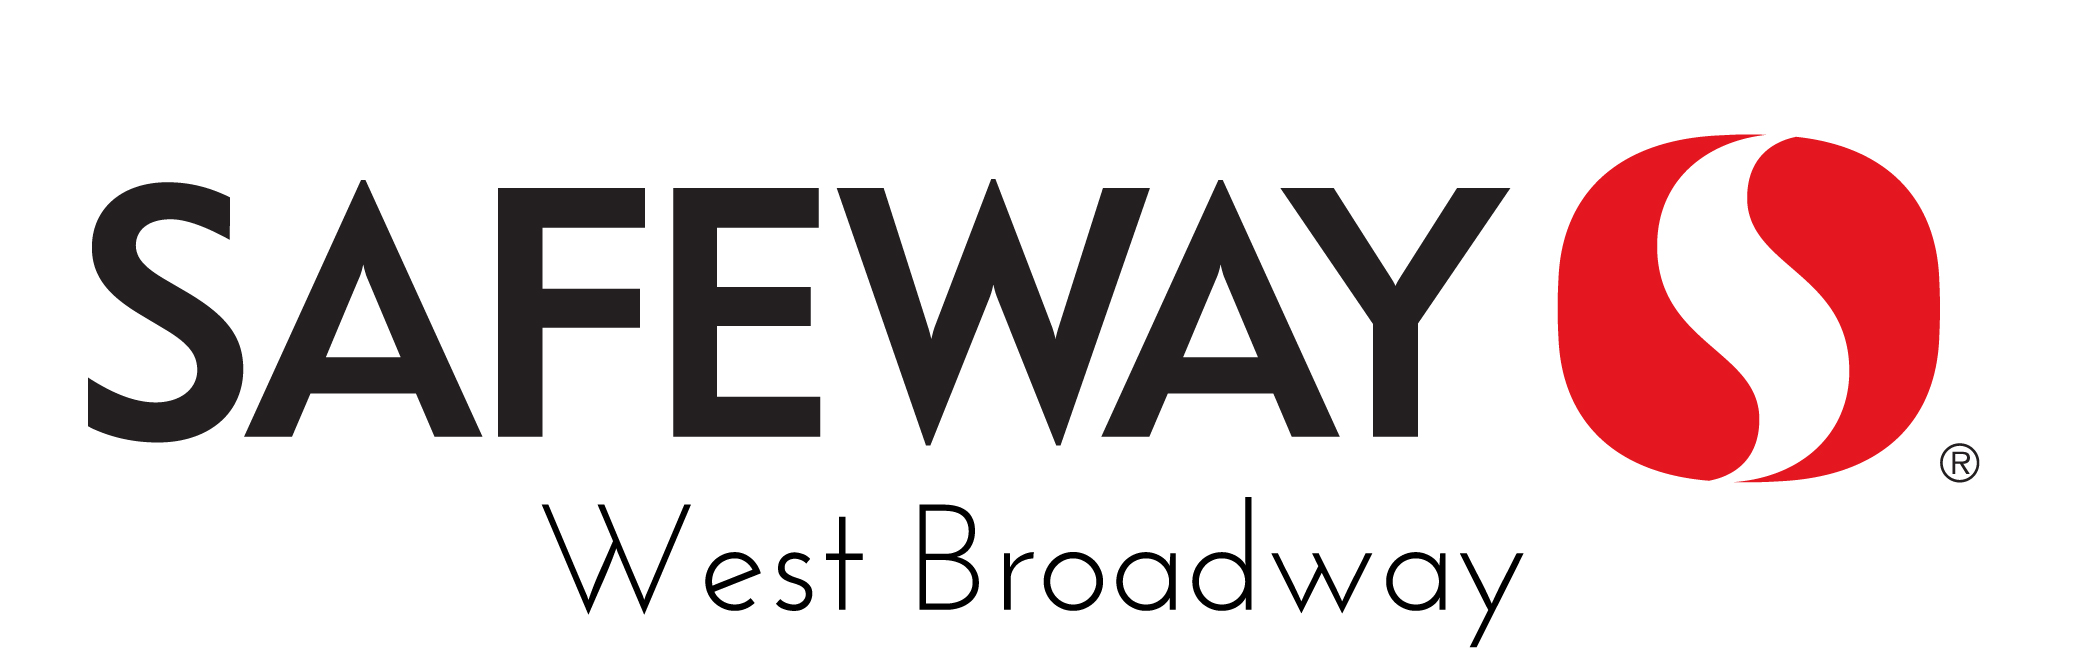 Safeway-Logo copy.png